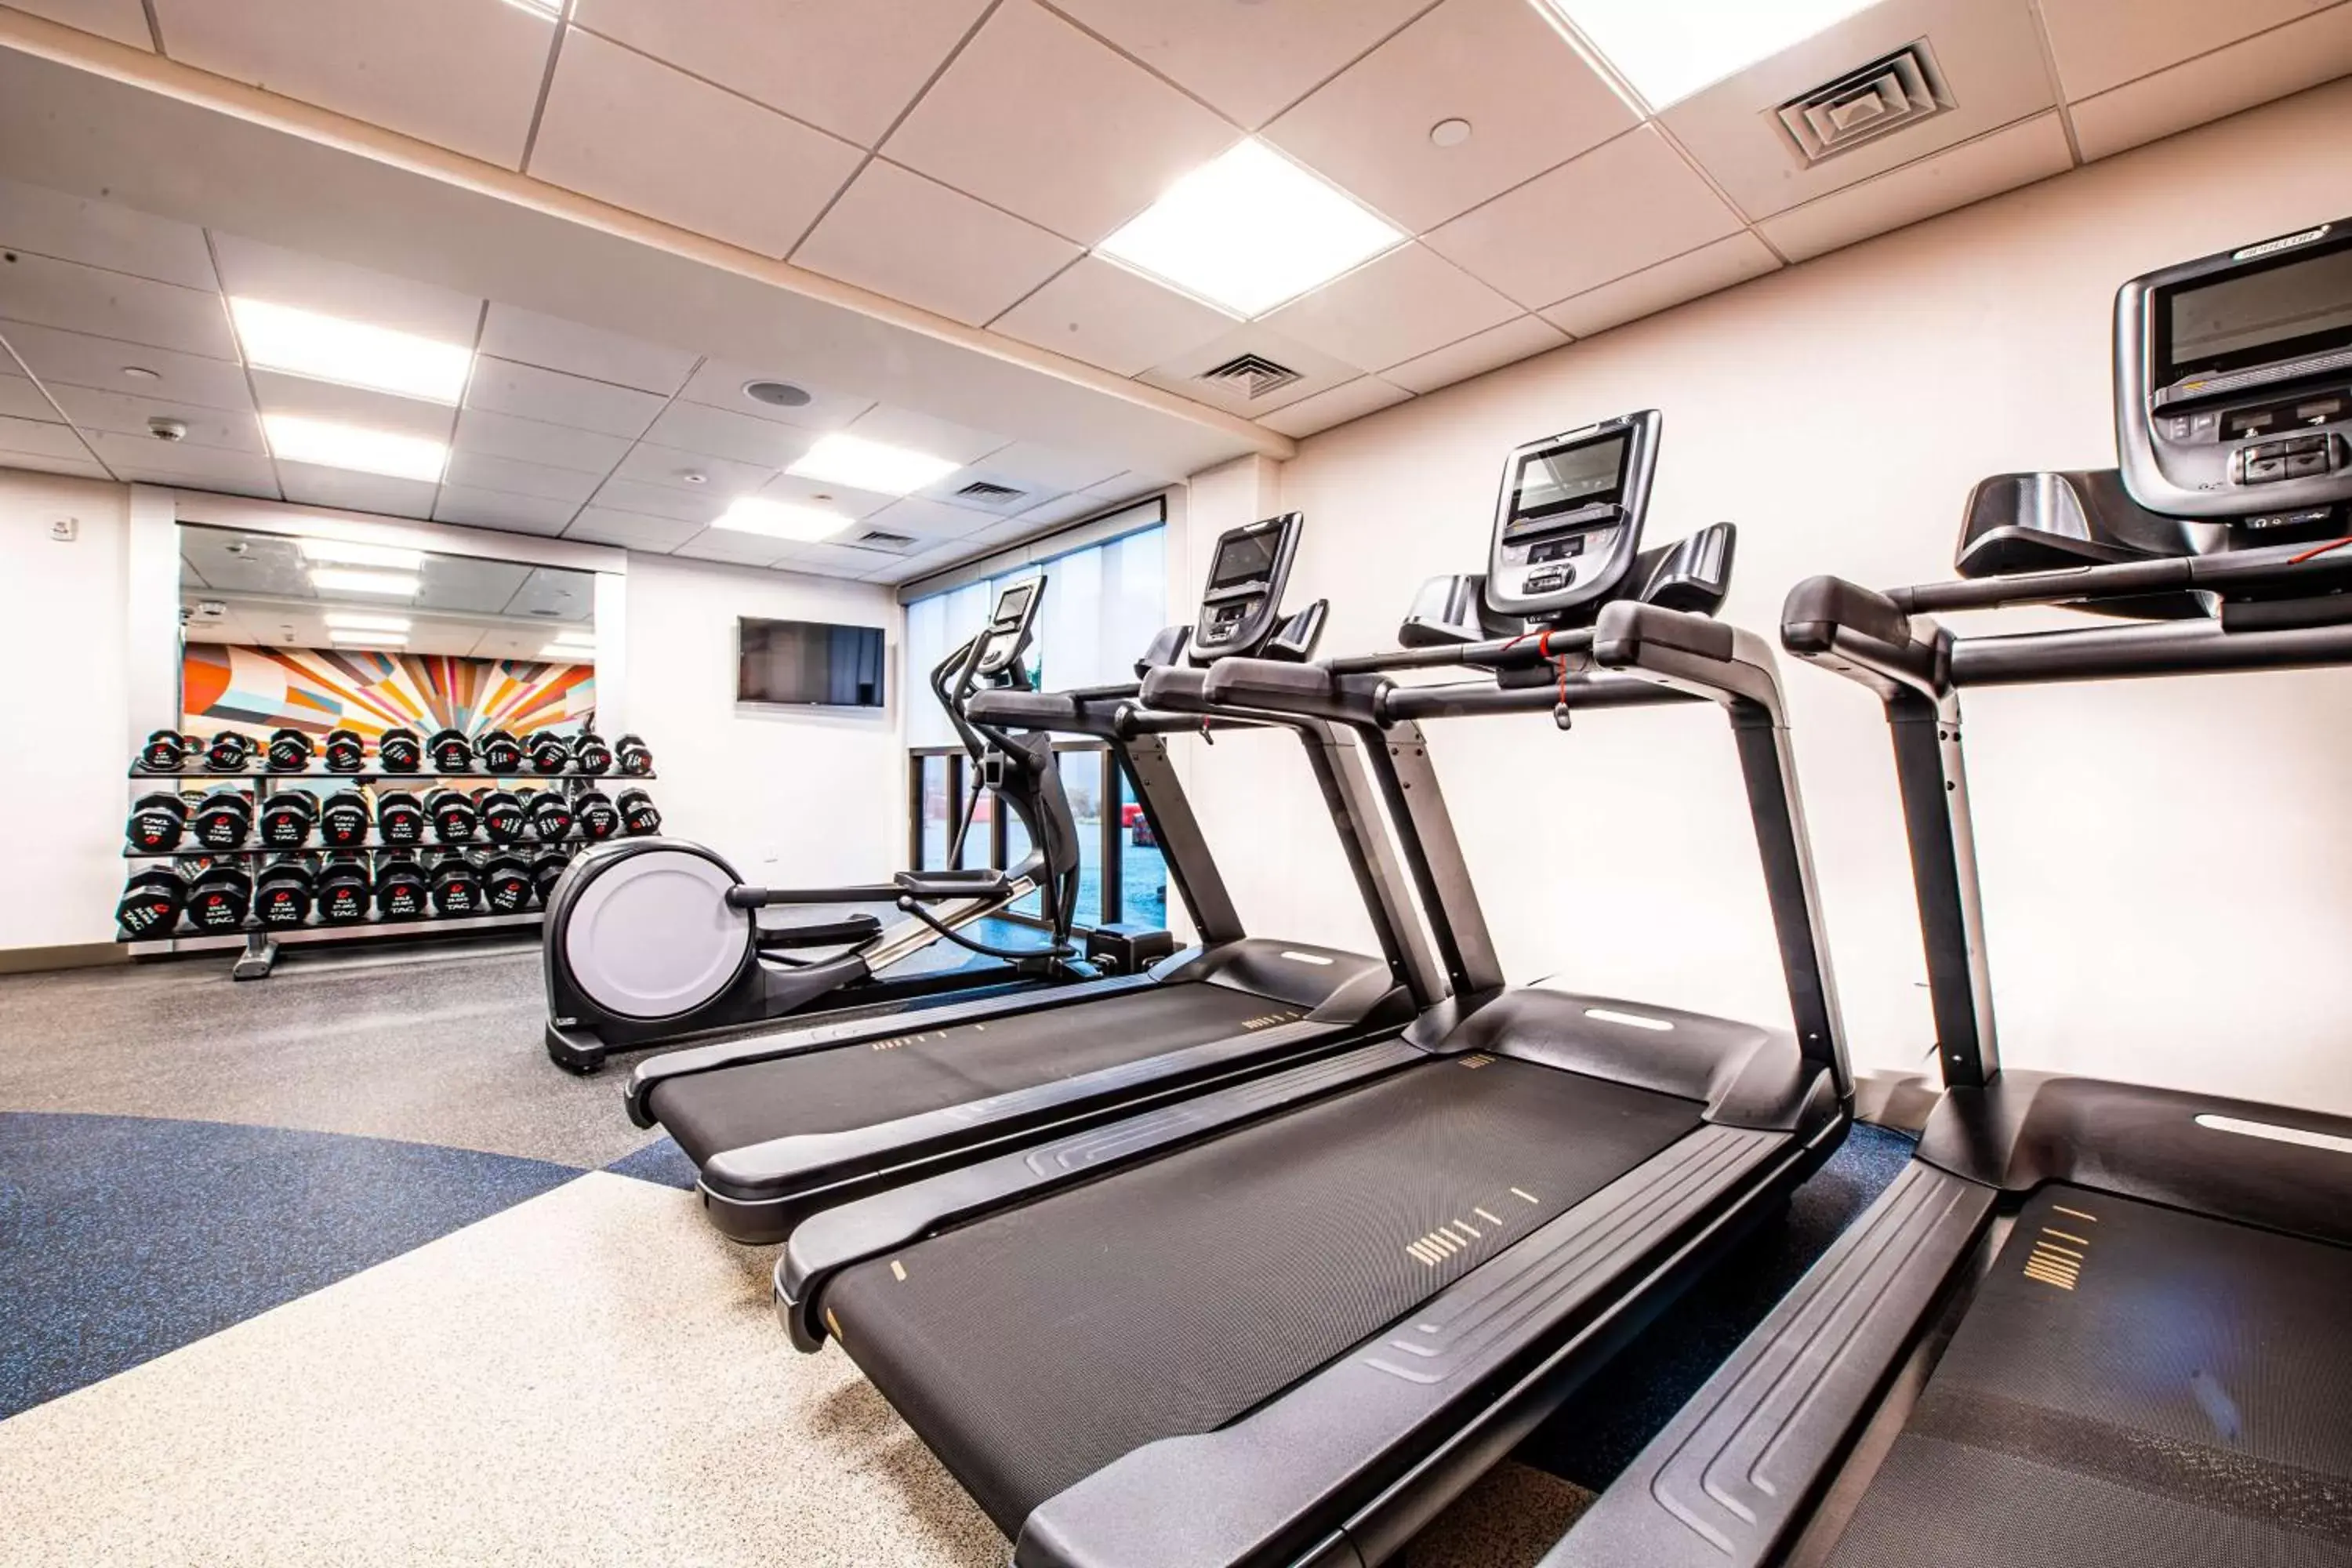 Fitness centre/facilities, Fitness Center/Facilities in Hilton Garden Inn Asheville South